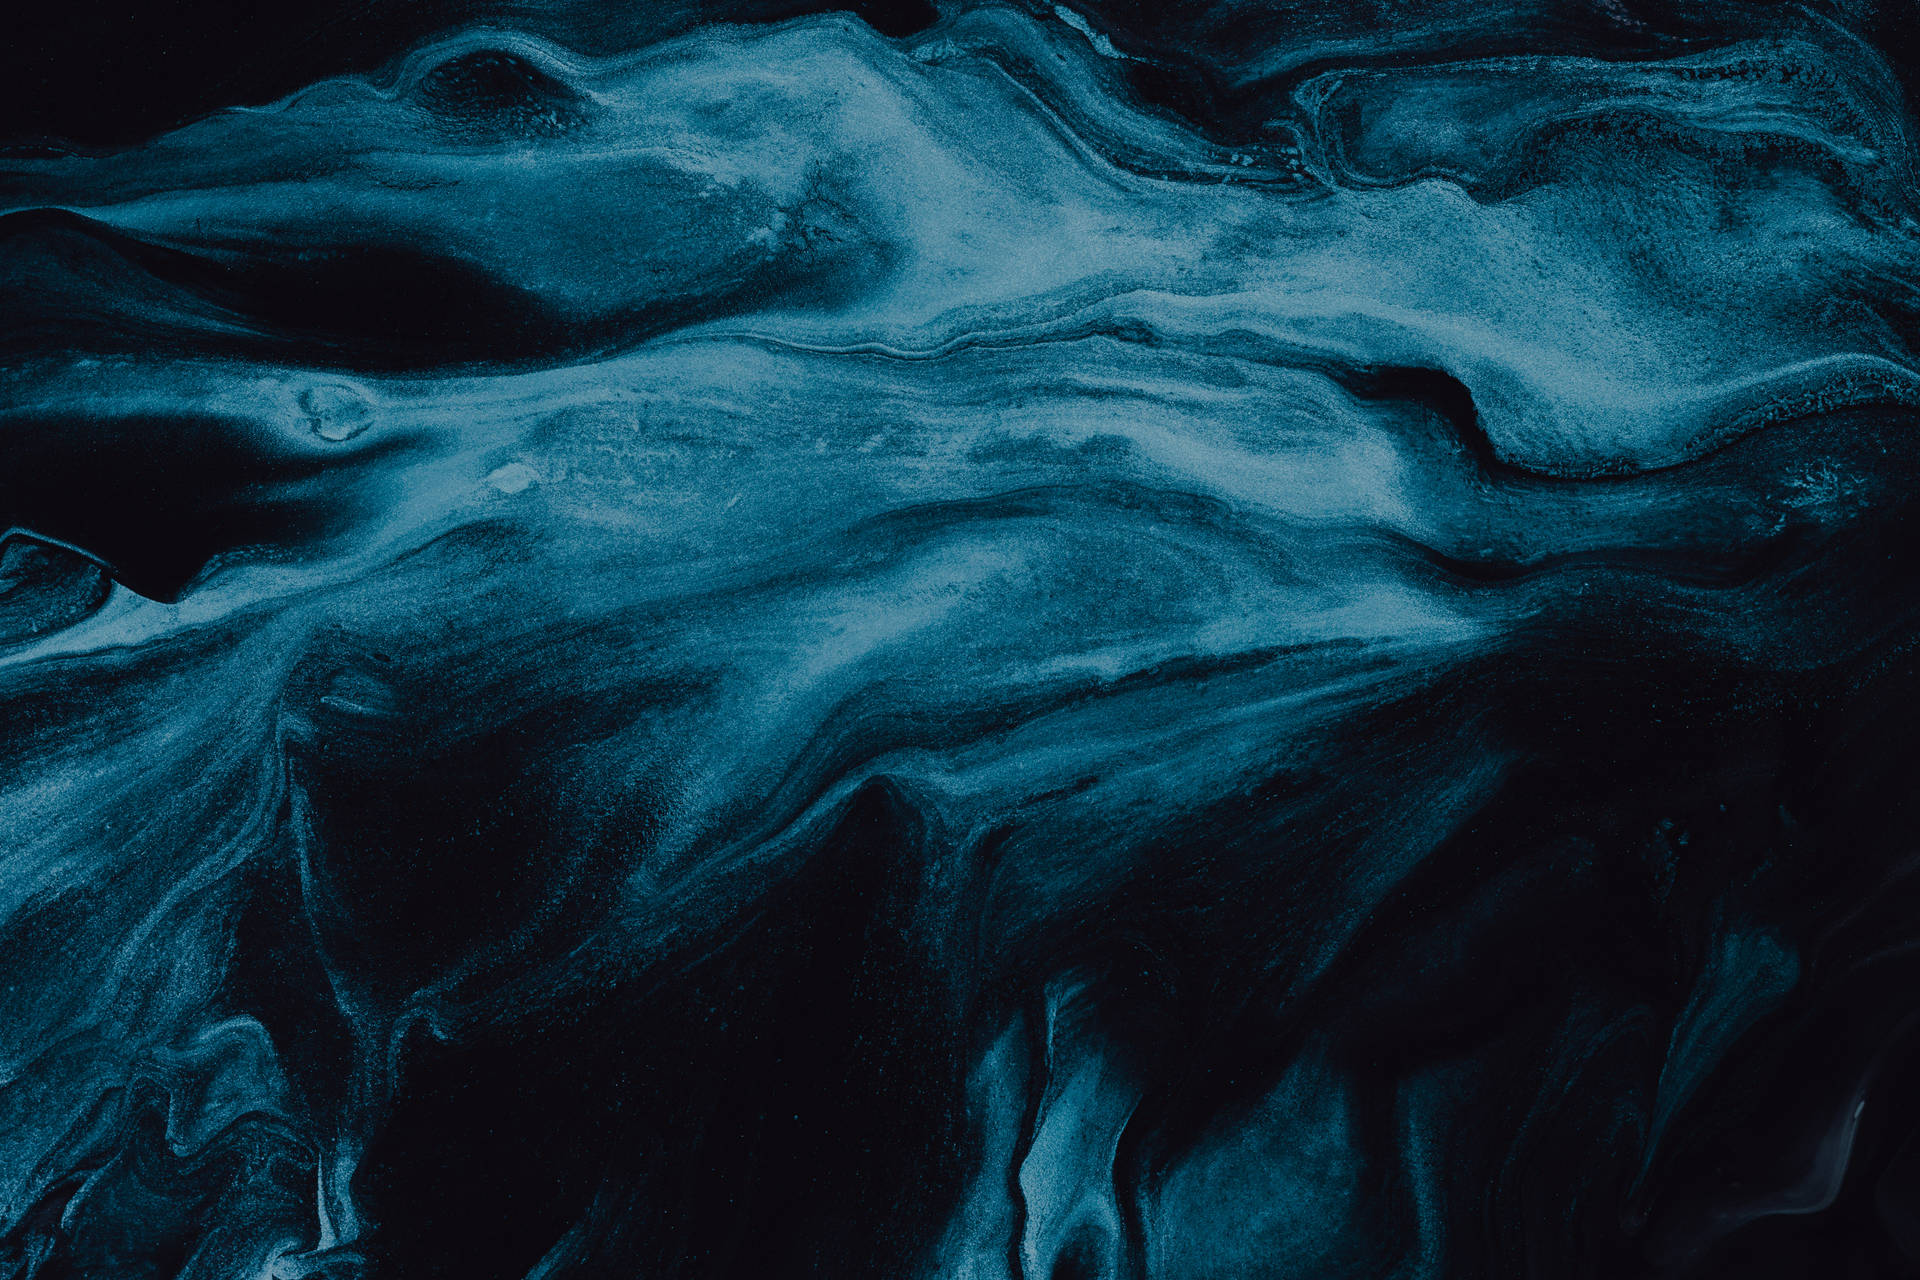 Dark Abstract Fluid Art Background